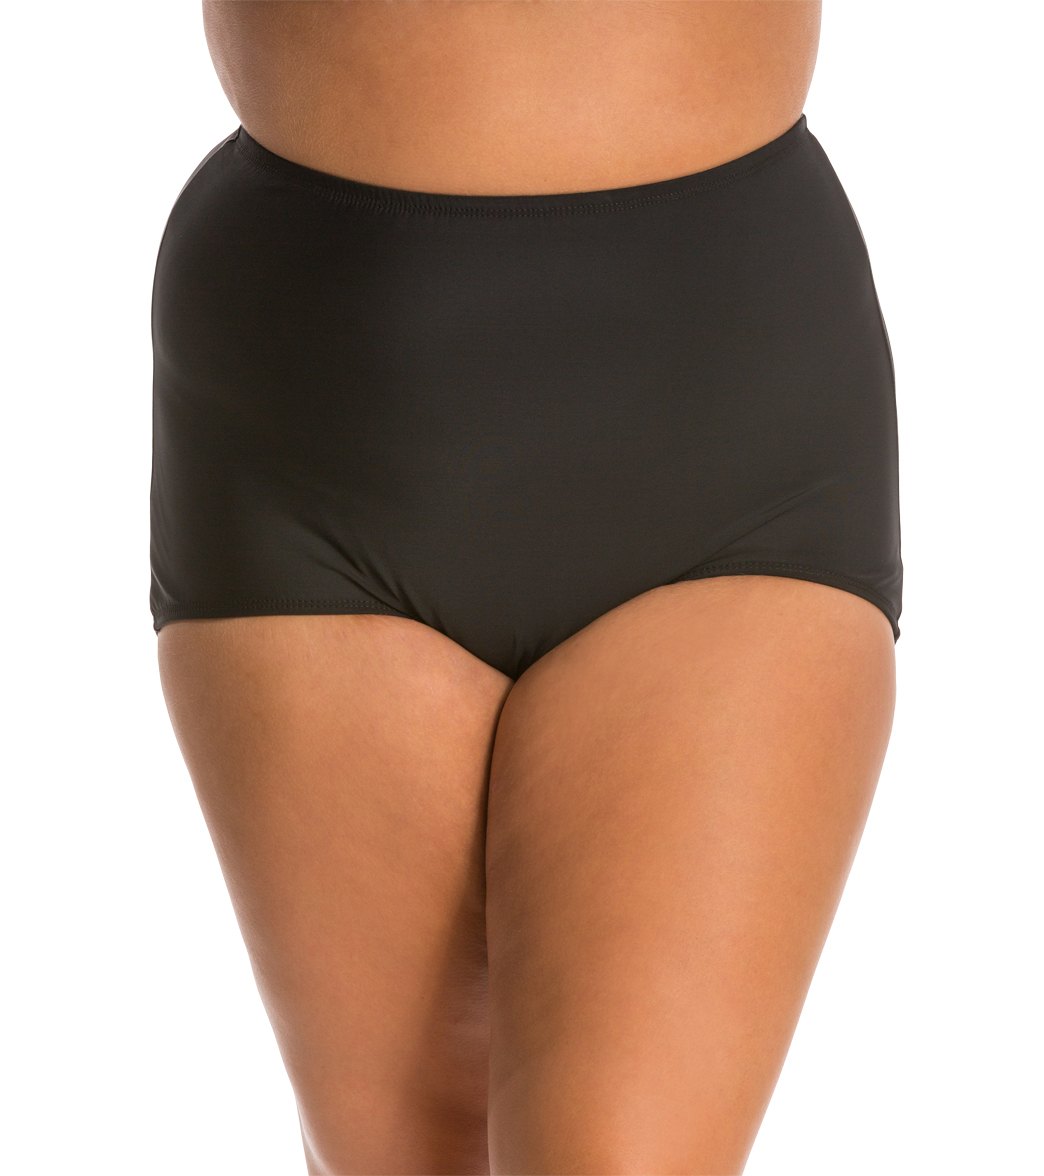 Topanga Plus Size Solid Conservative Brief Bikini Bottom - Black 22W Nylon/Spandex - Swimoutlet.com